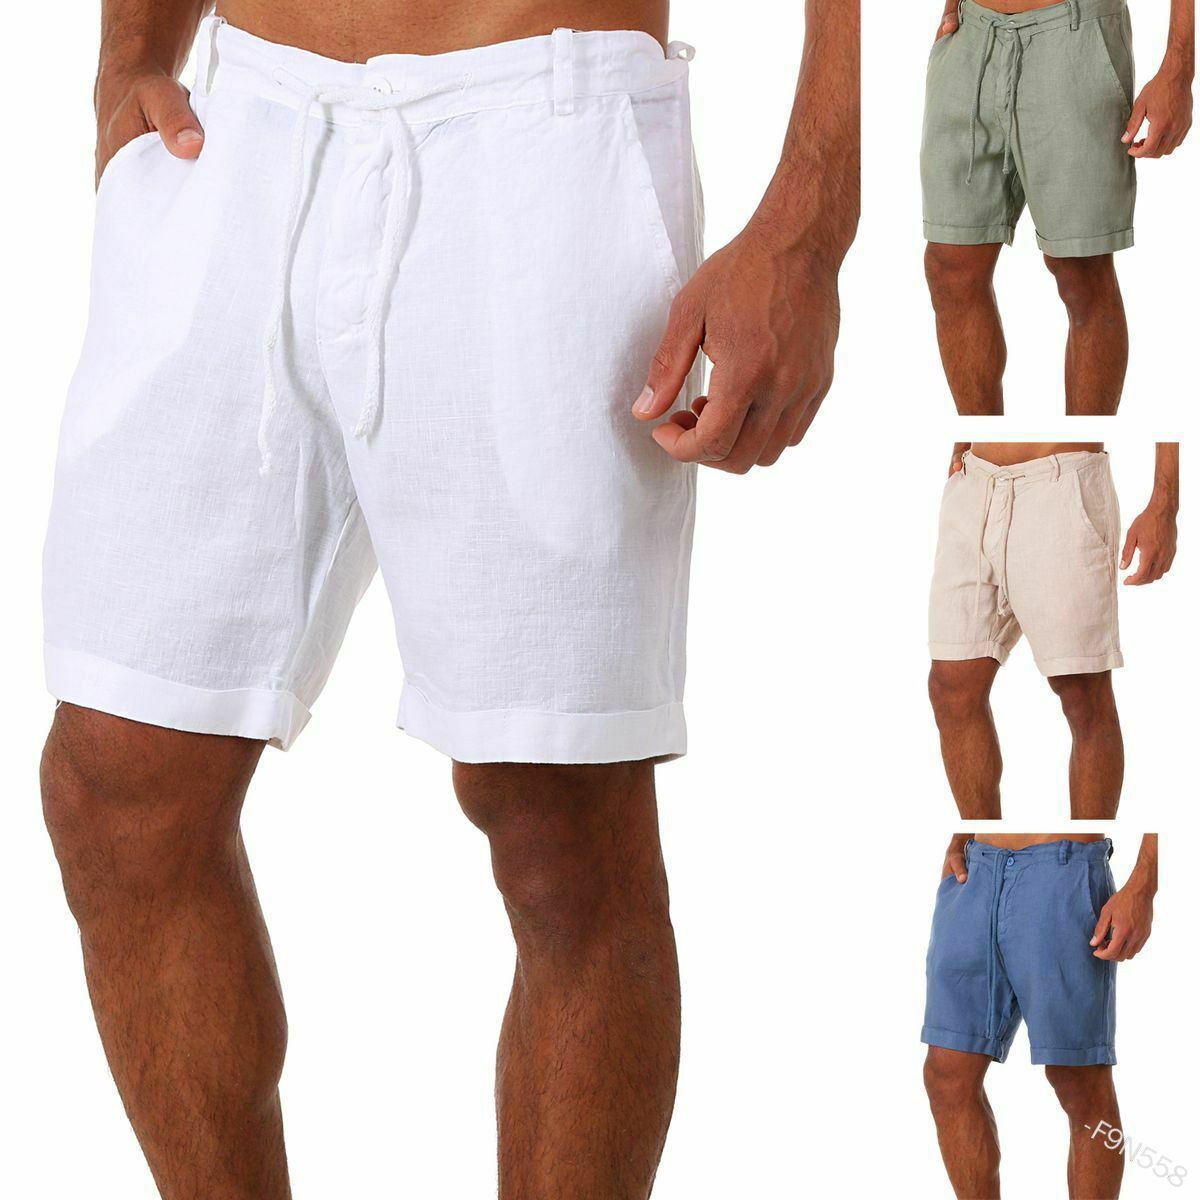 Solid Color Lace Up Sports Pants Men's Shorts Casual Pants